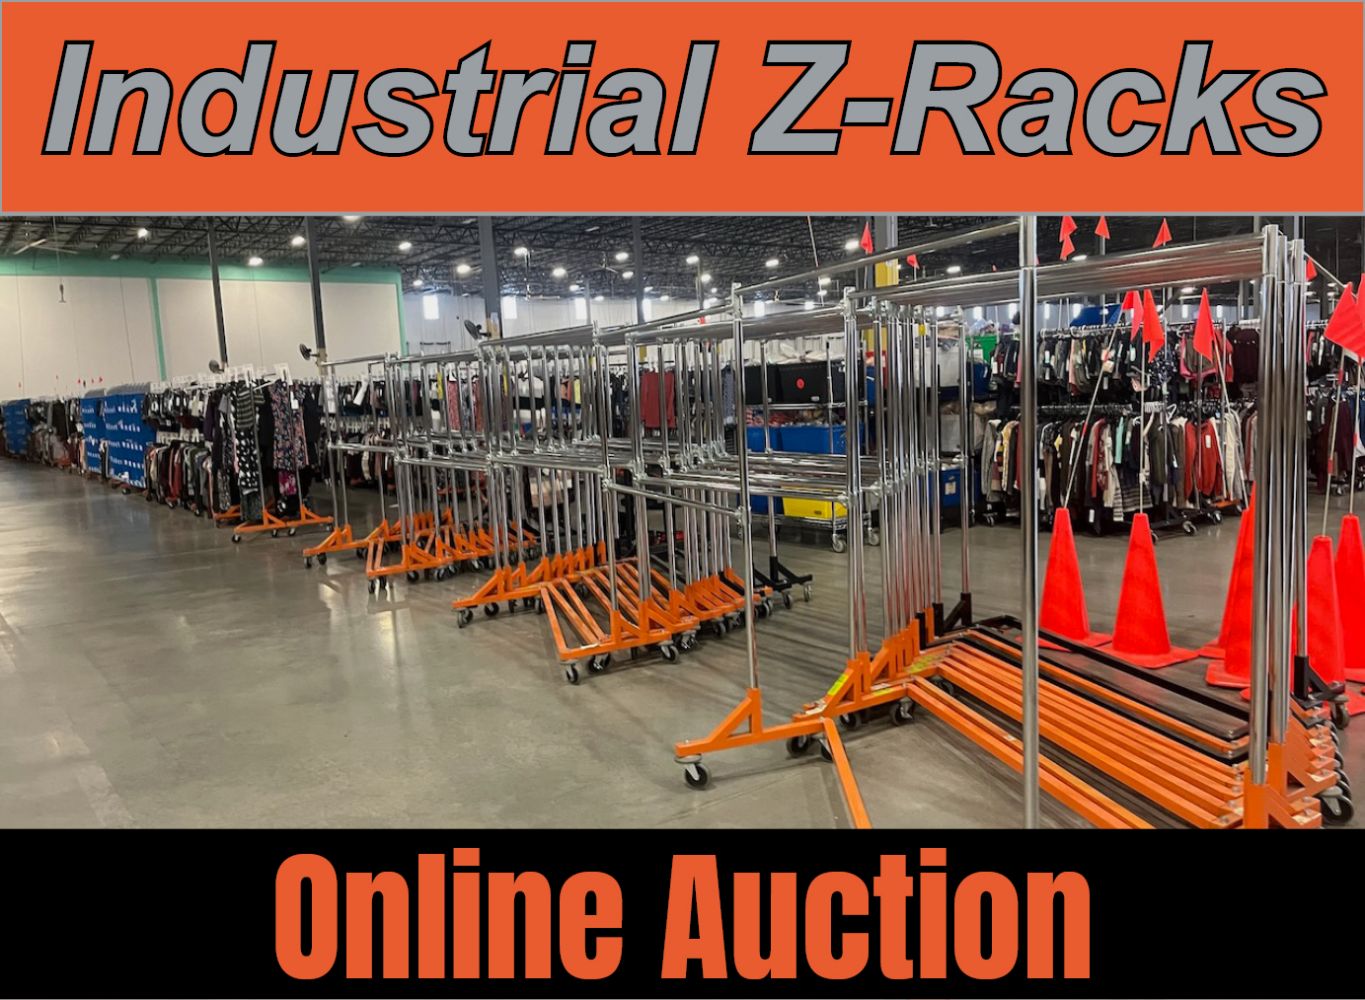 Industrial Z-Racks Online Auction